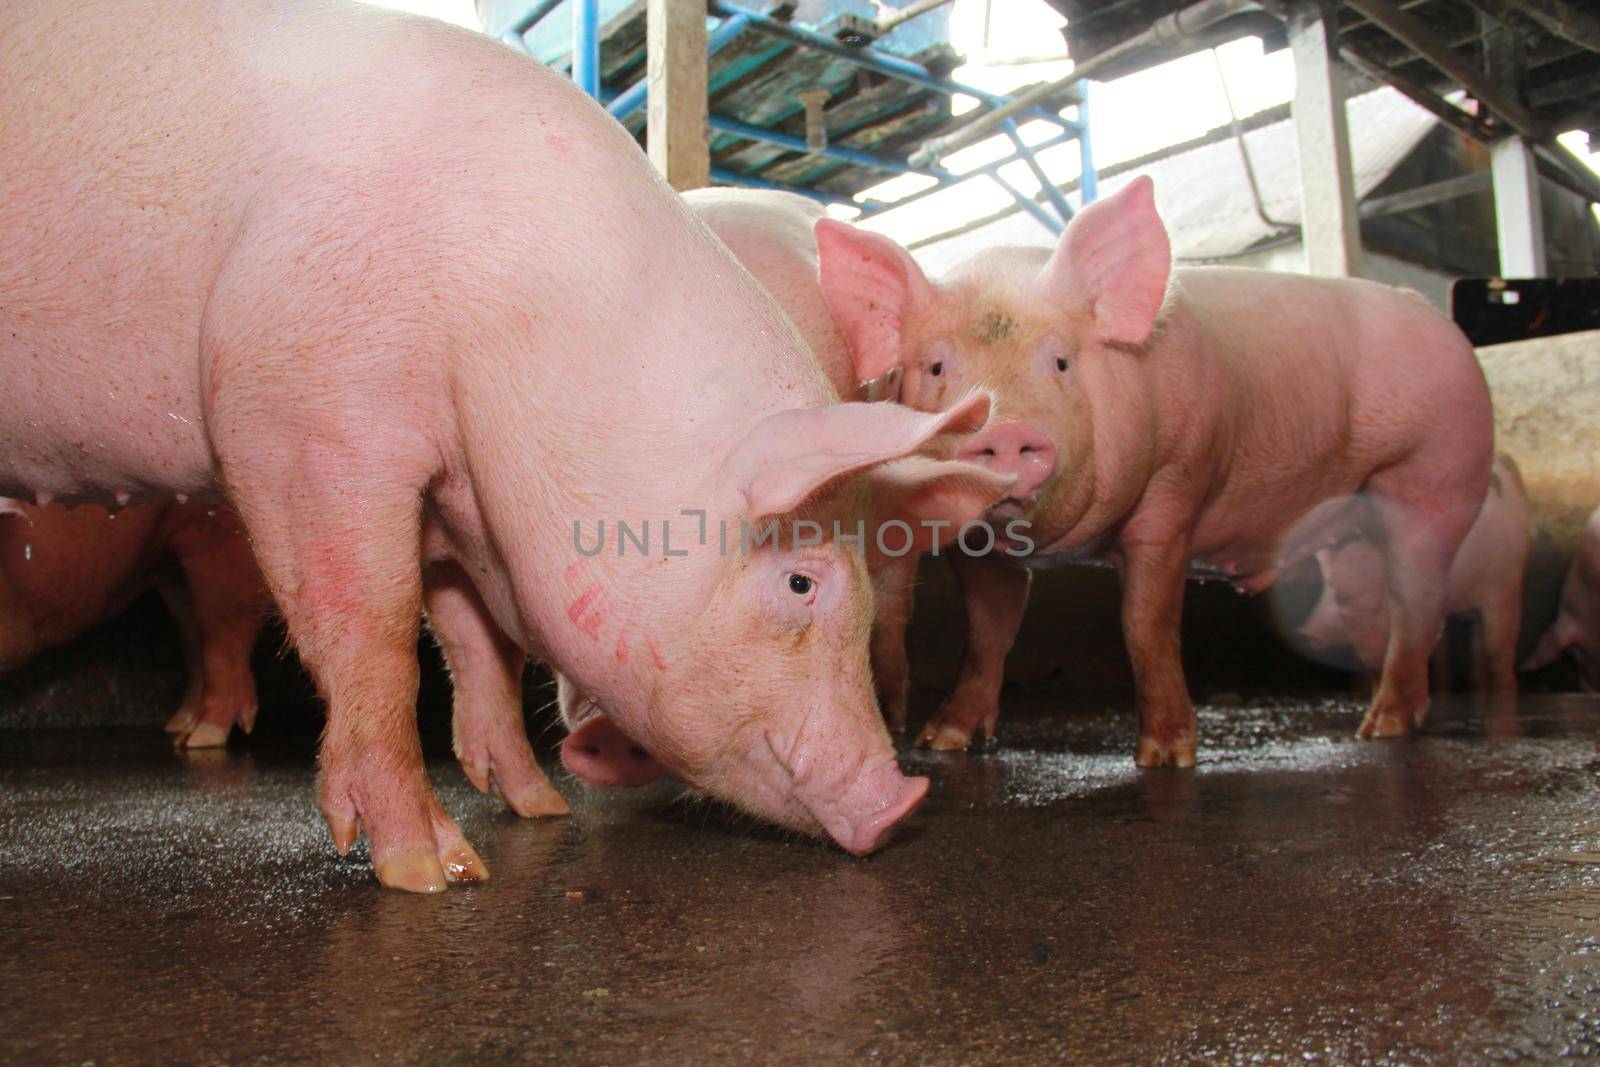 itabuna, bahia / brazil - june 15, 2012: Pig breeding farm in the city of Itabuna.